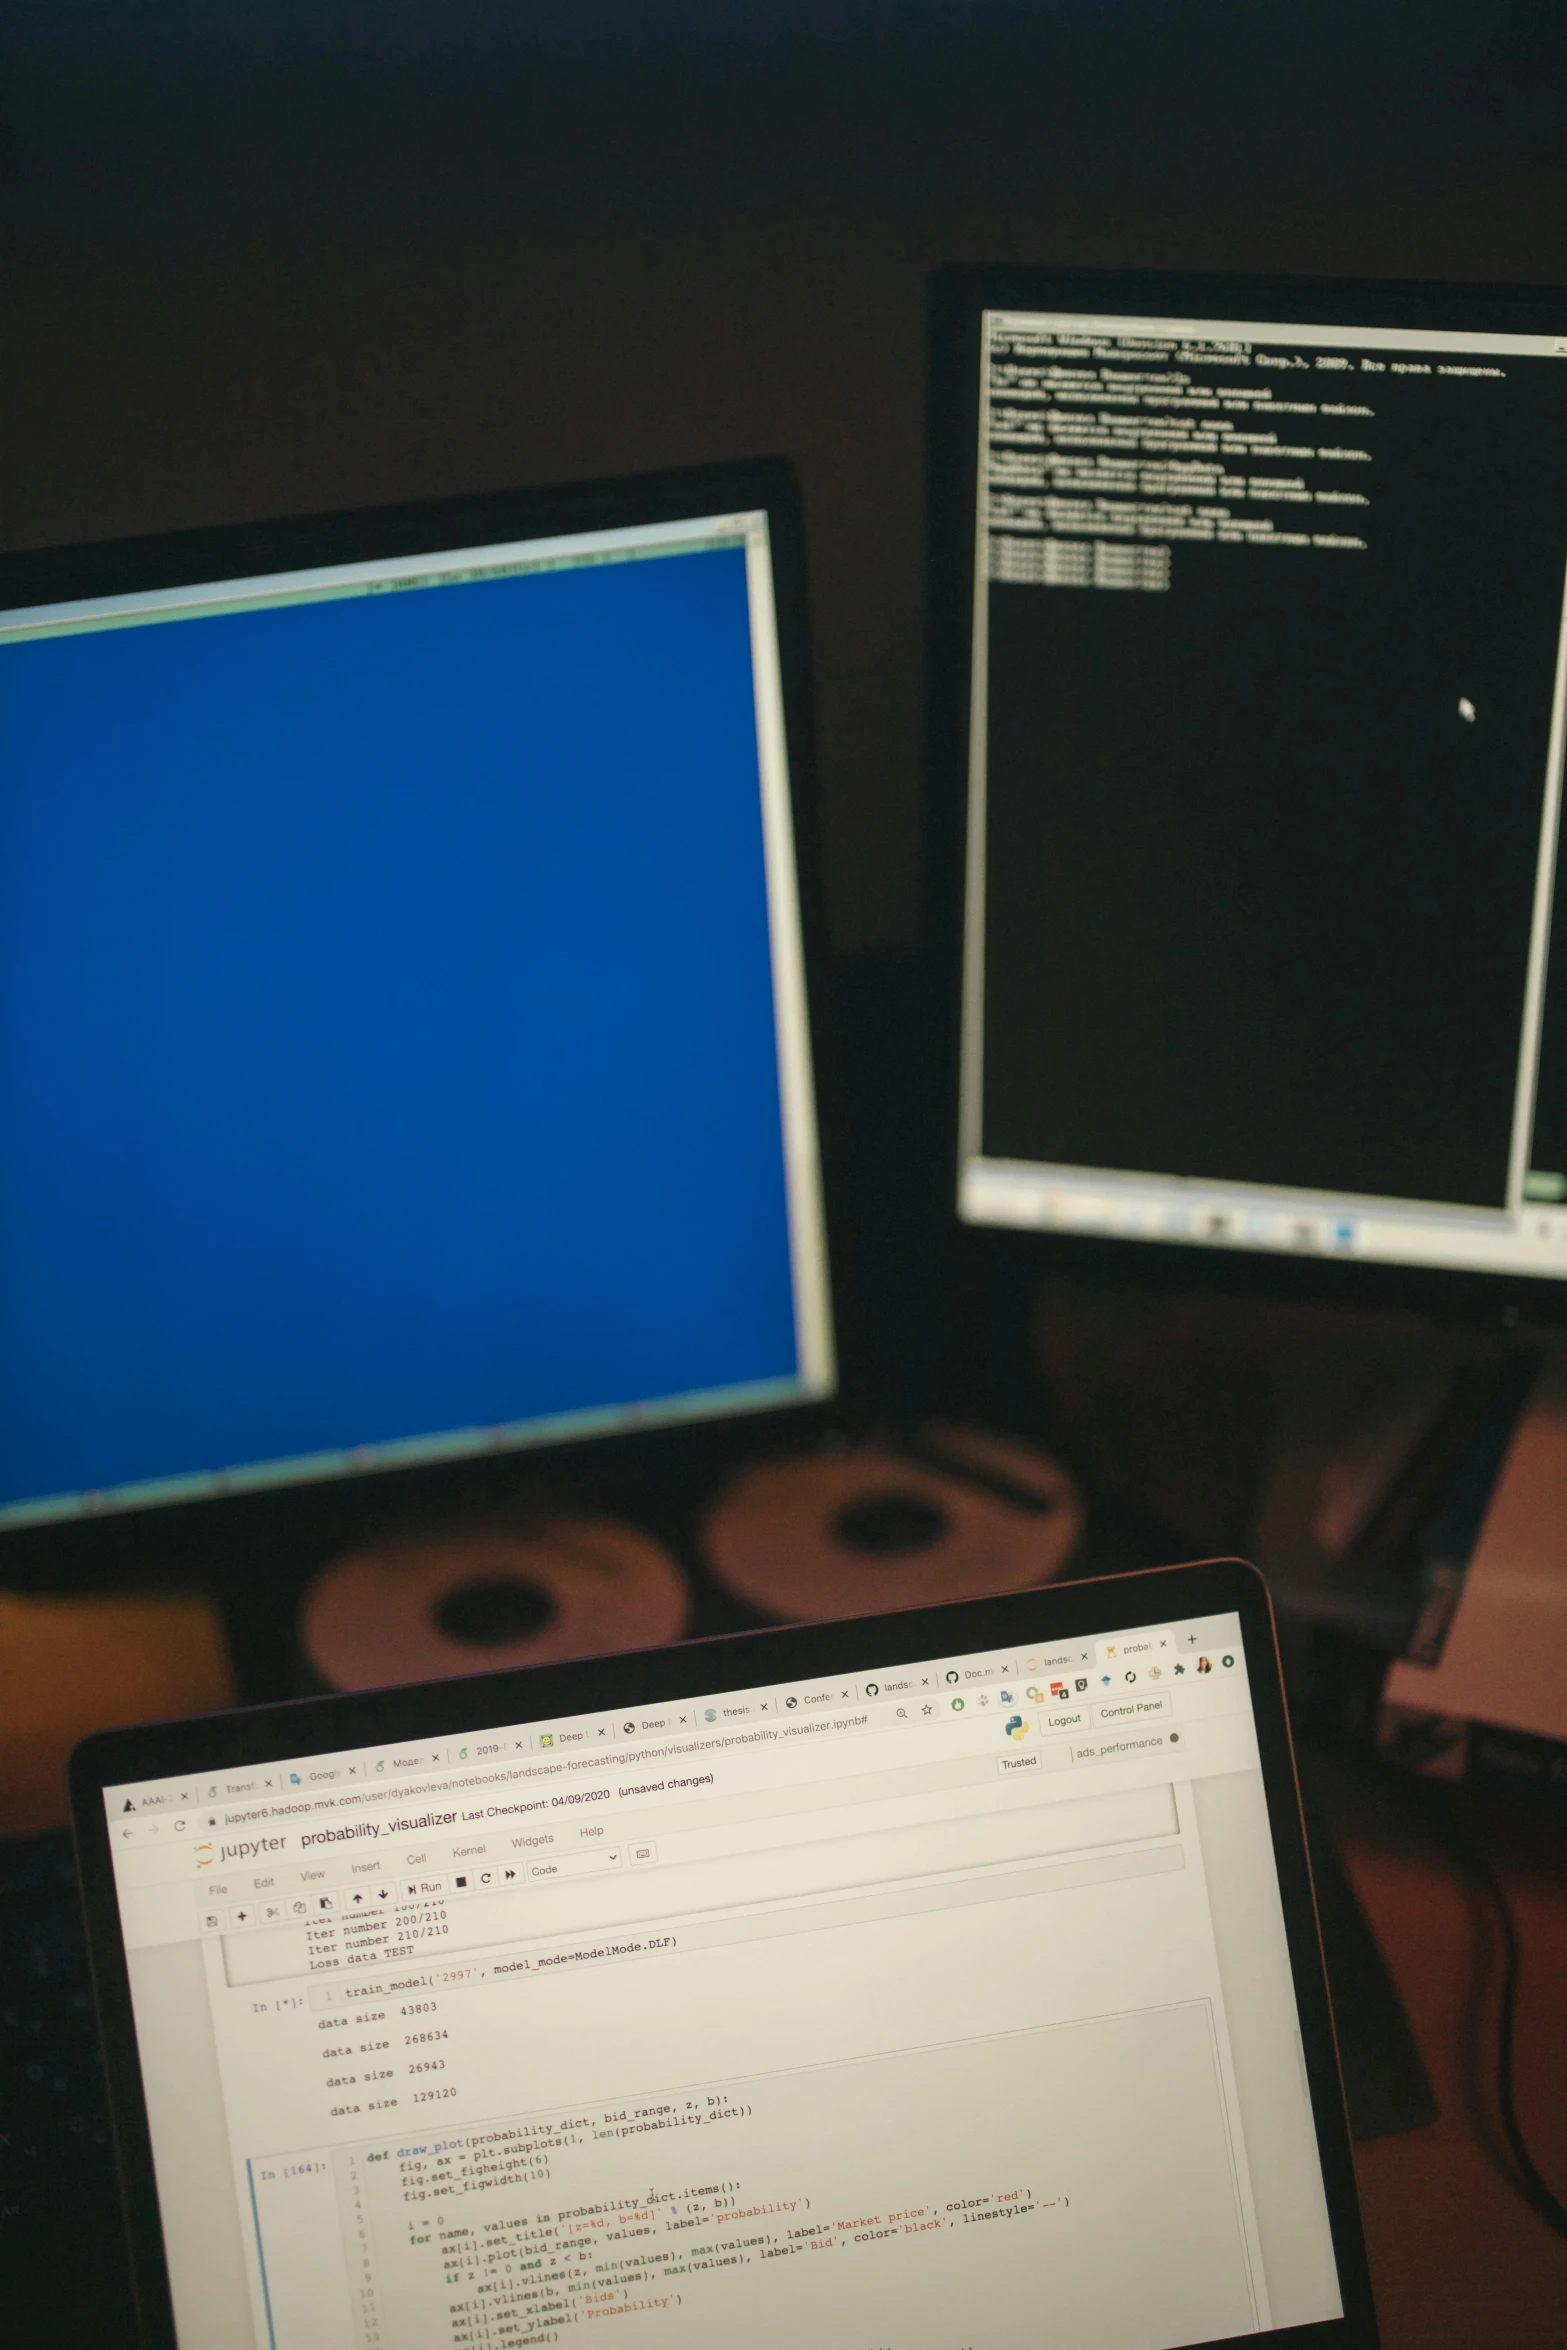 a laptop computer sitting on top of a wooden desk, reddit, computer art, crt screens in background, hacking, ilustration, blue backlight